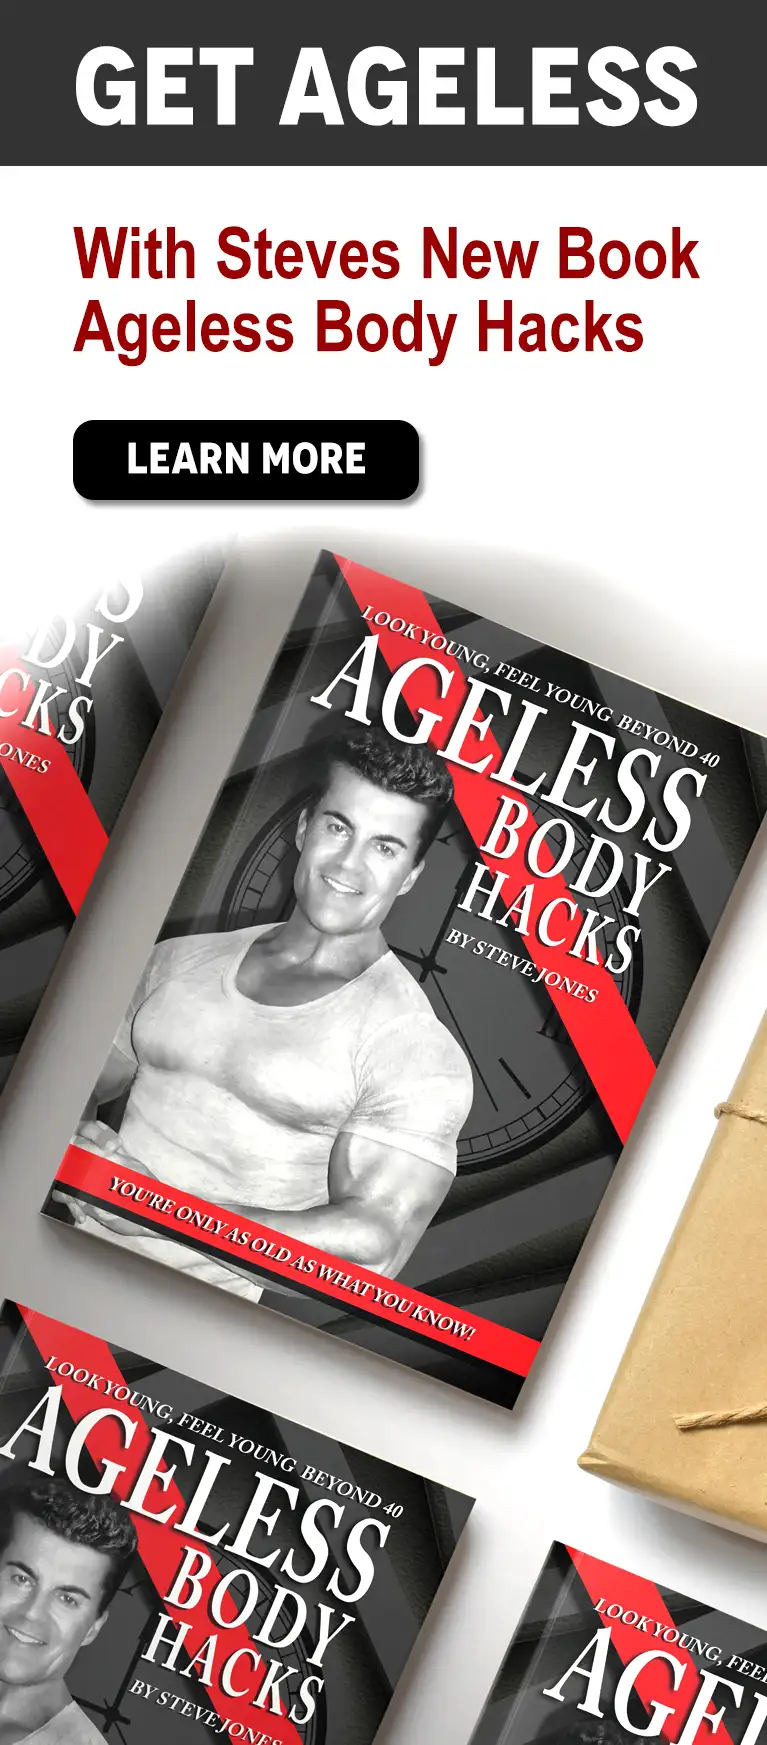 Ageless Body Hacks Book By Steve Jones